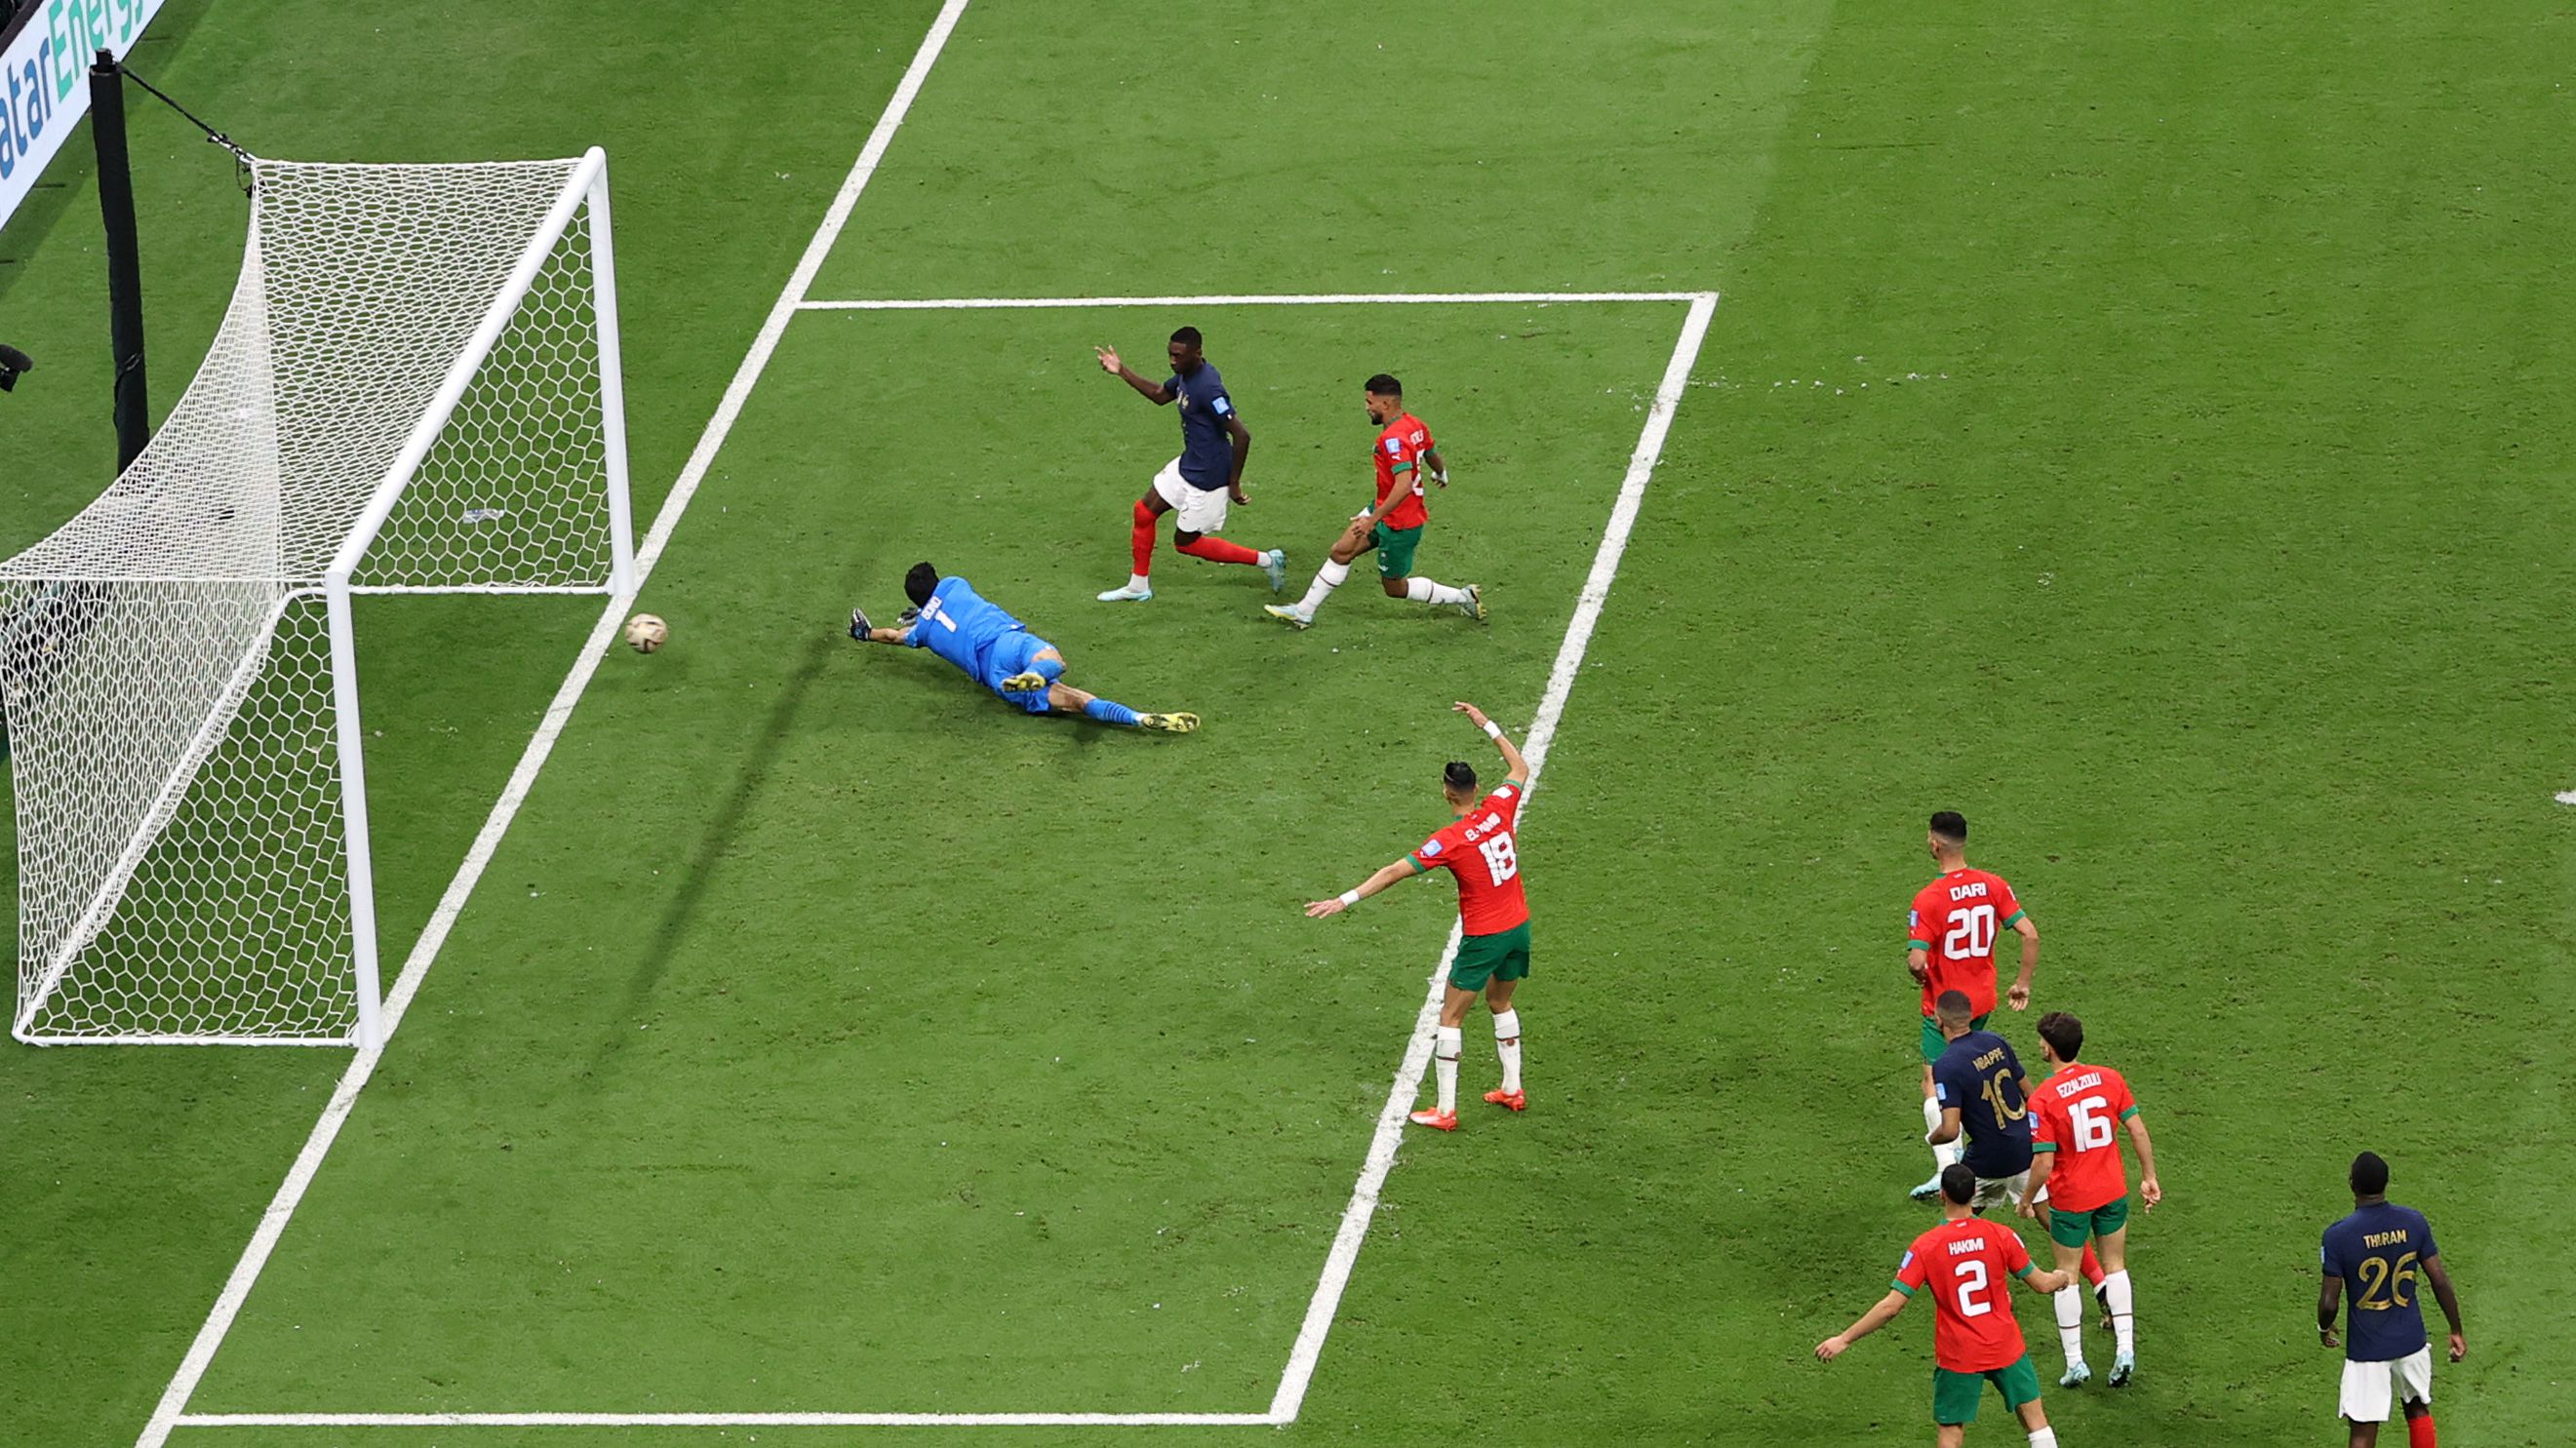 Momento exato do gol de Kolo Muani (Crédito: Getty Images)